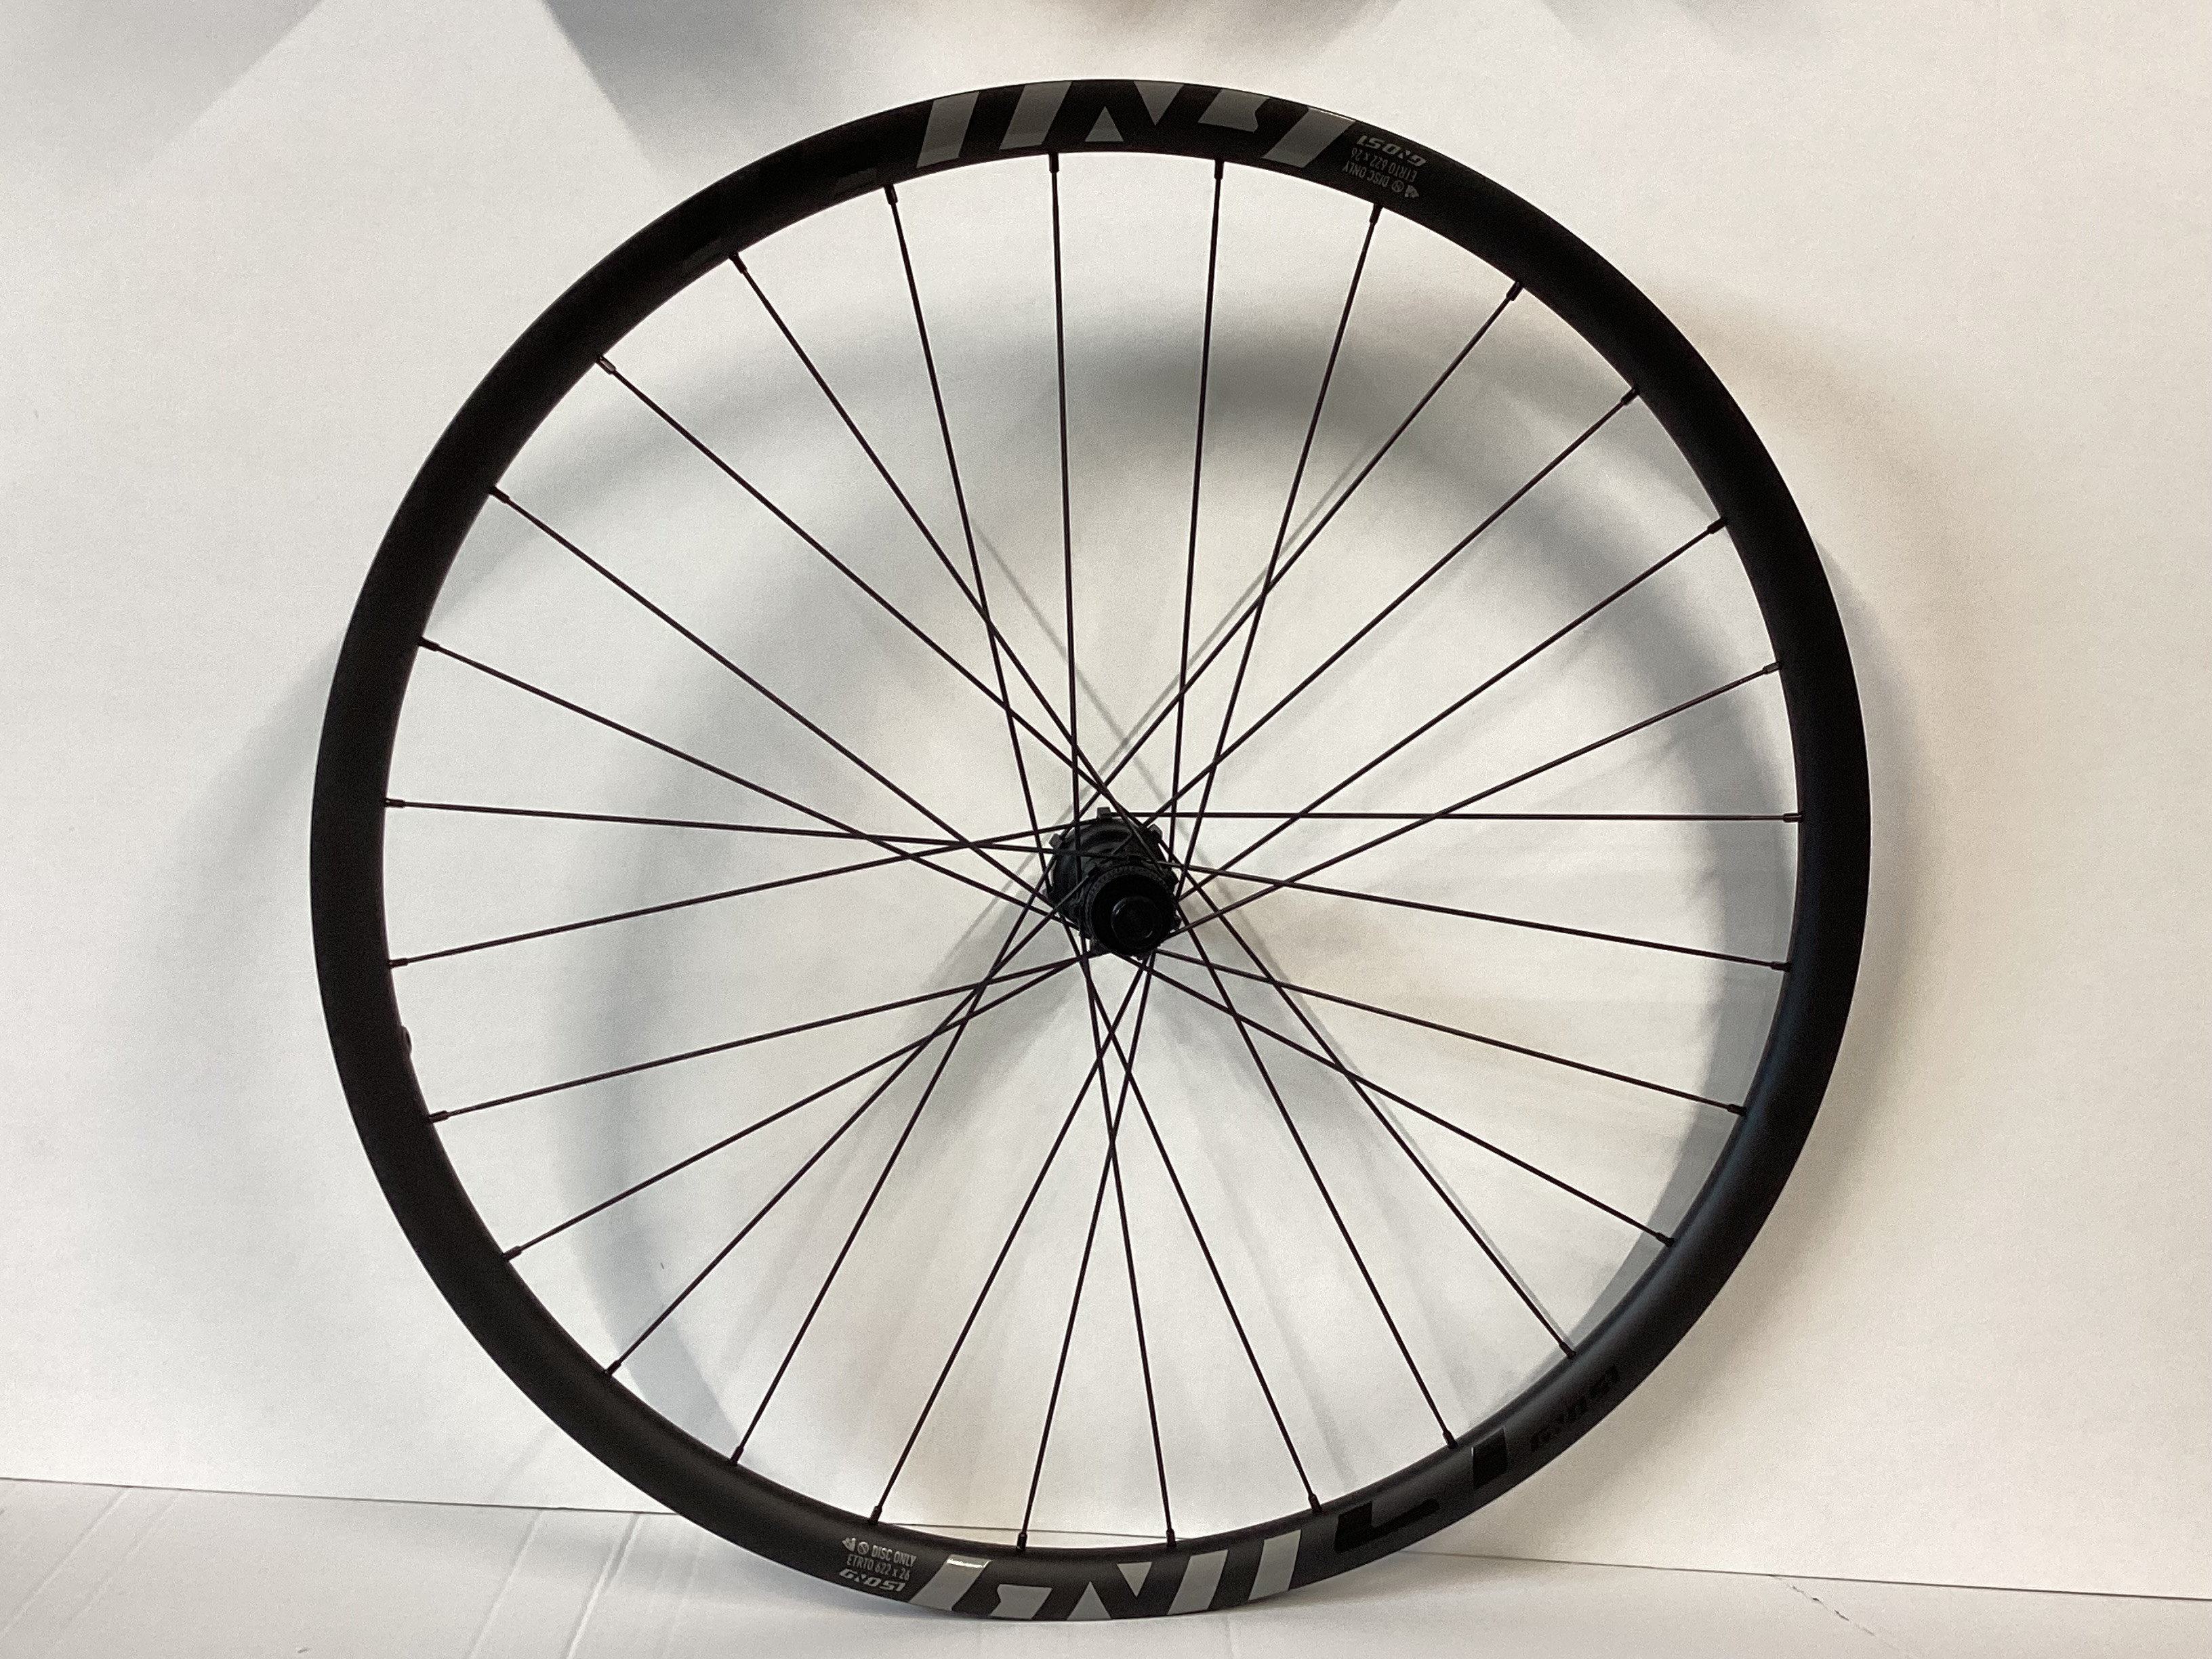 GHOST/LP REAR Wheel 29" Carbon Disc Boost 12x148mm Microspline Black (10LPDAM299CUDBT48MSR)